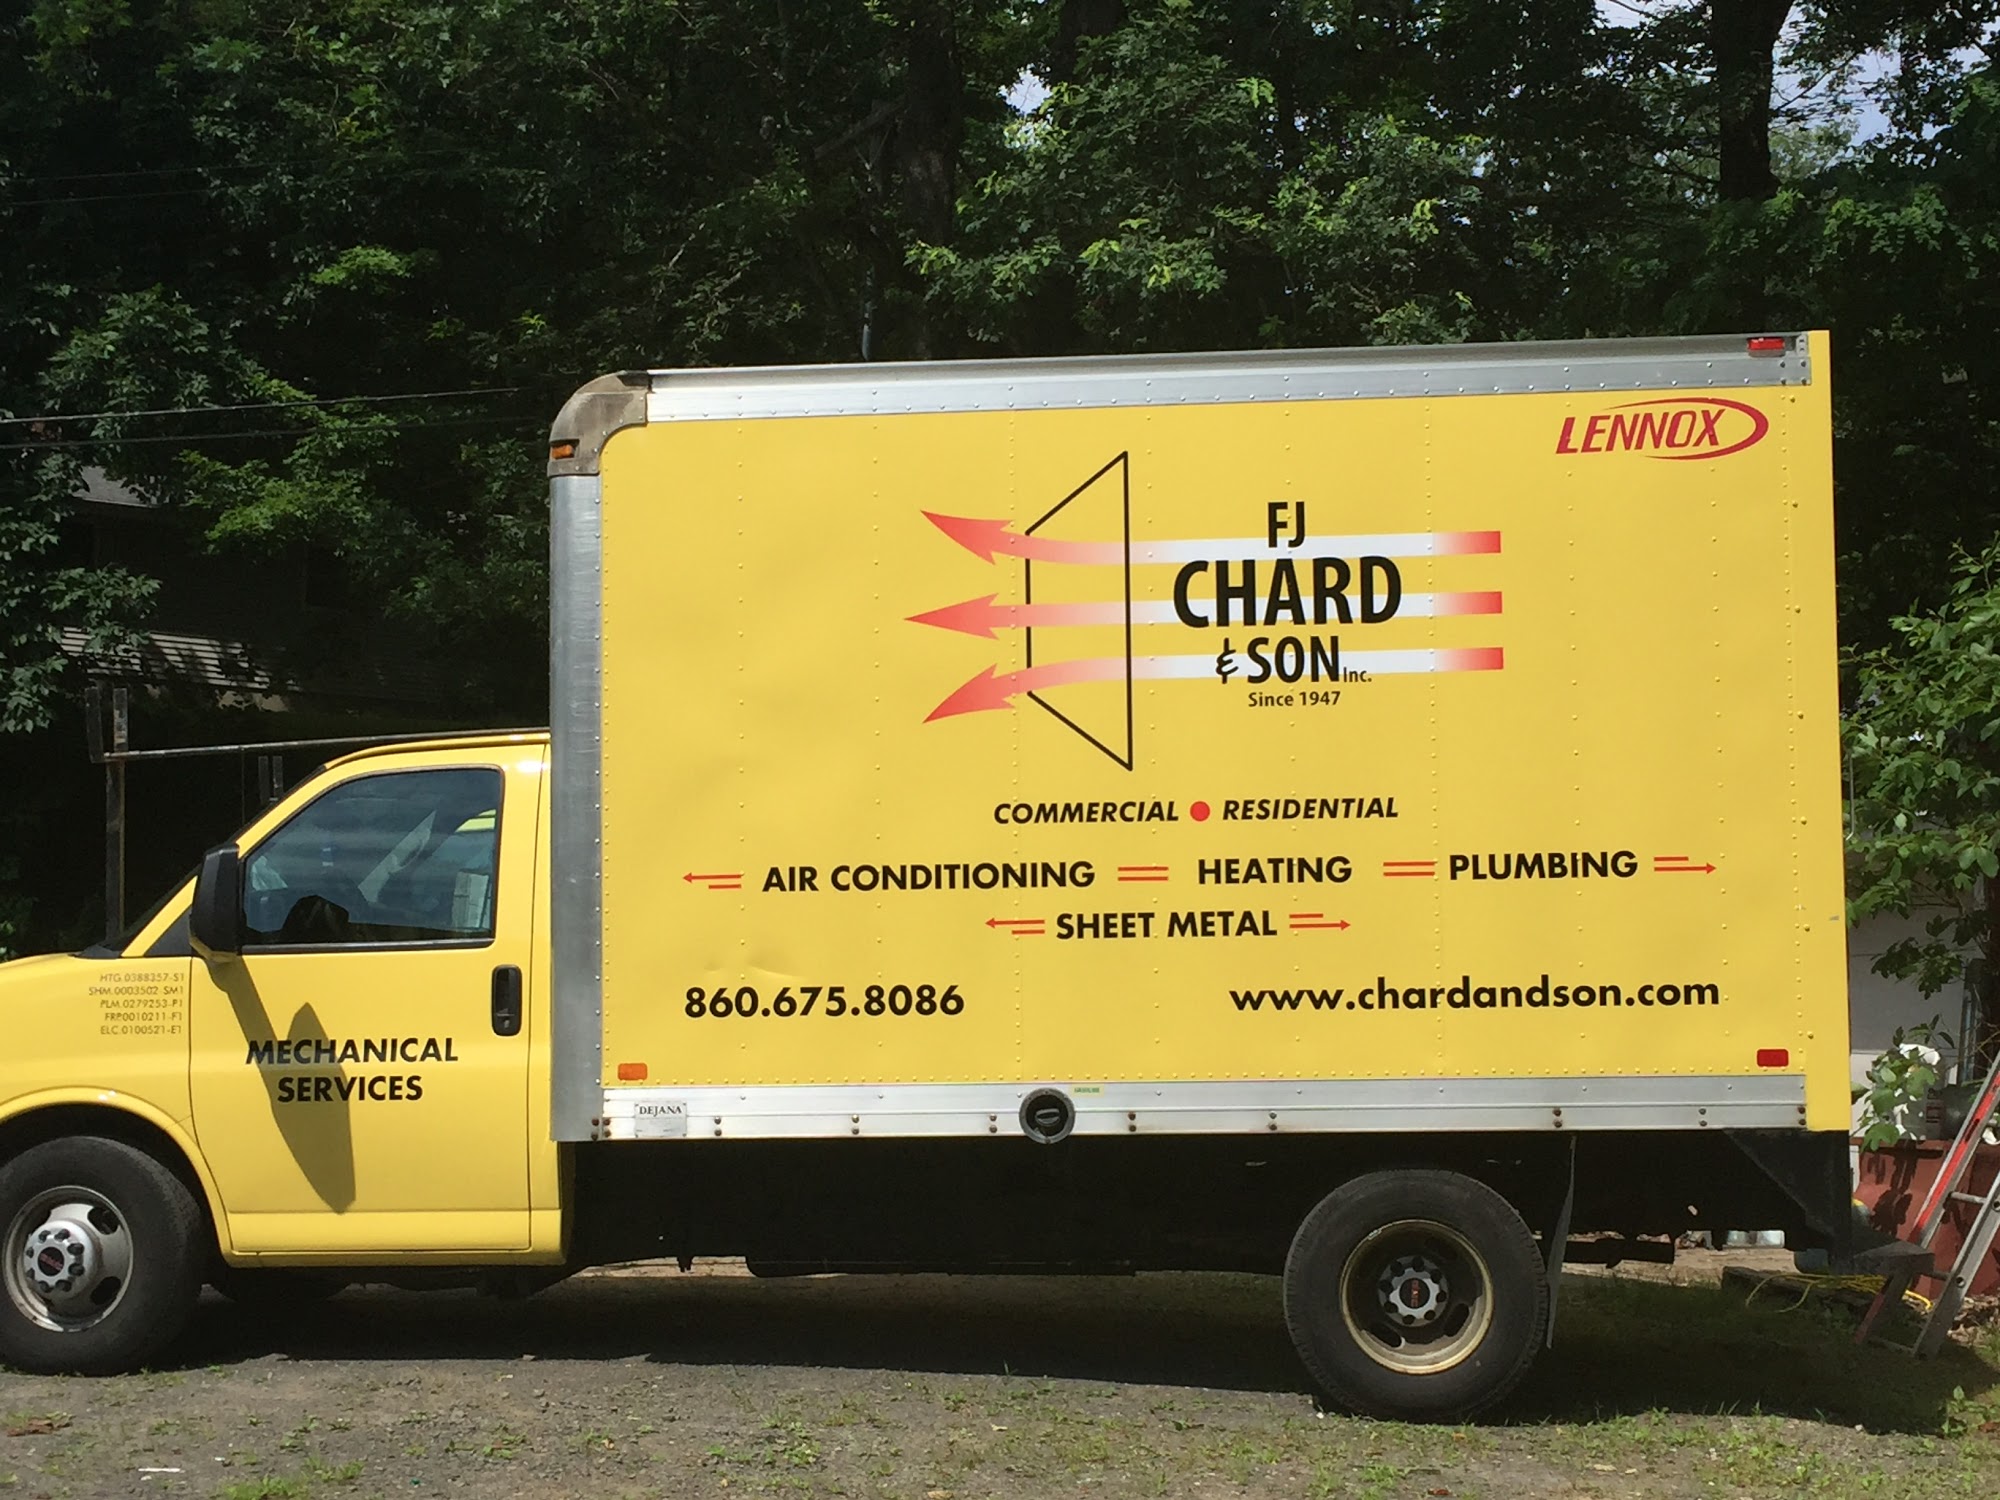 F. J. Chard & Son, Inc.